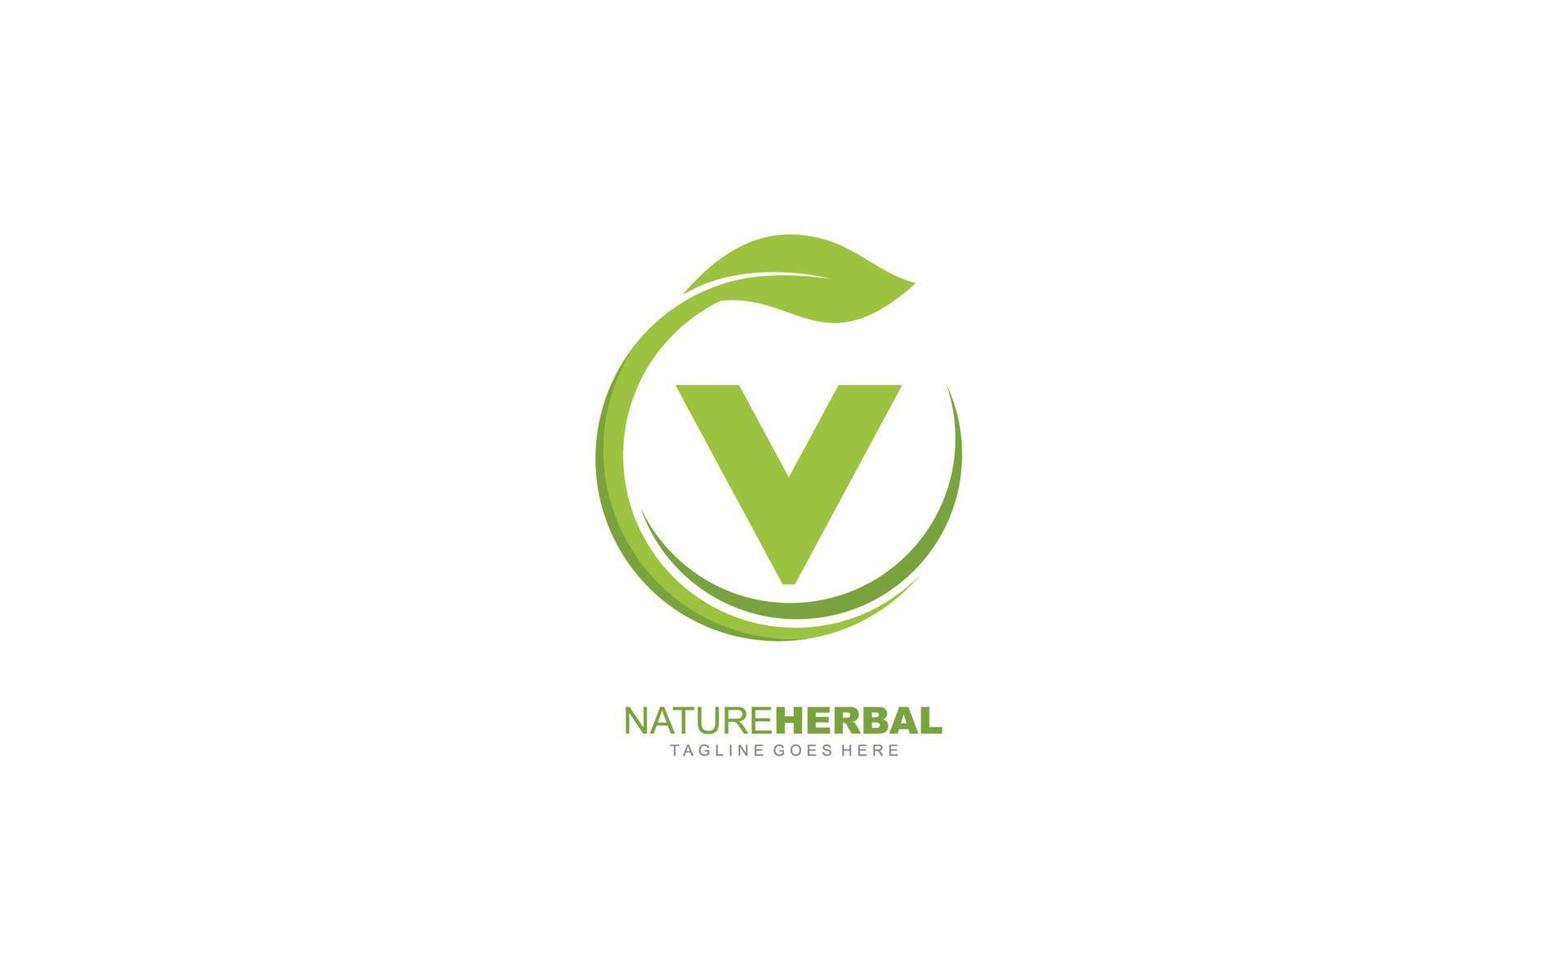 V logo leaf for identity. nature template vector illustration for your brand.